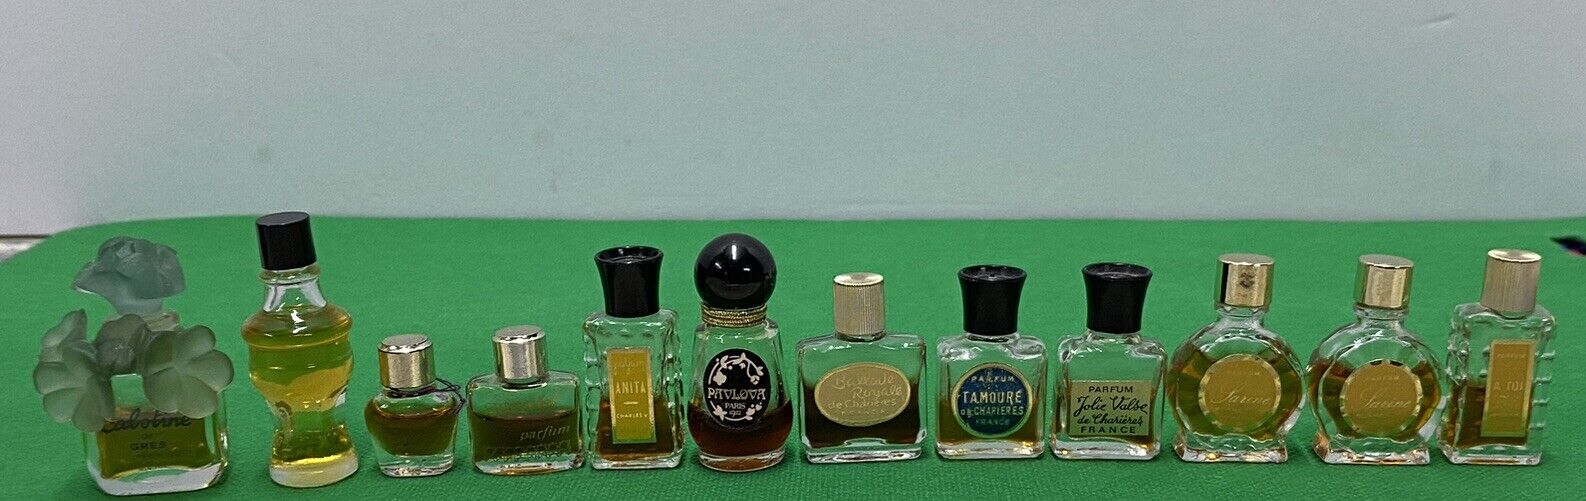 Vintage Perfume Lot Toilette Pavlova Anita Tamoure De Charieres France Mixed Lot